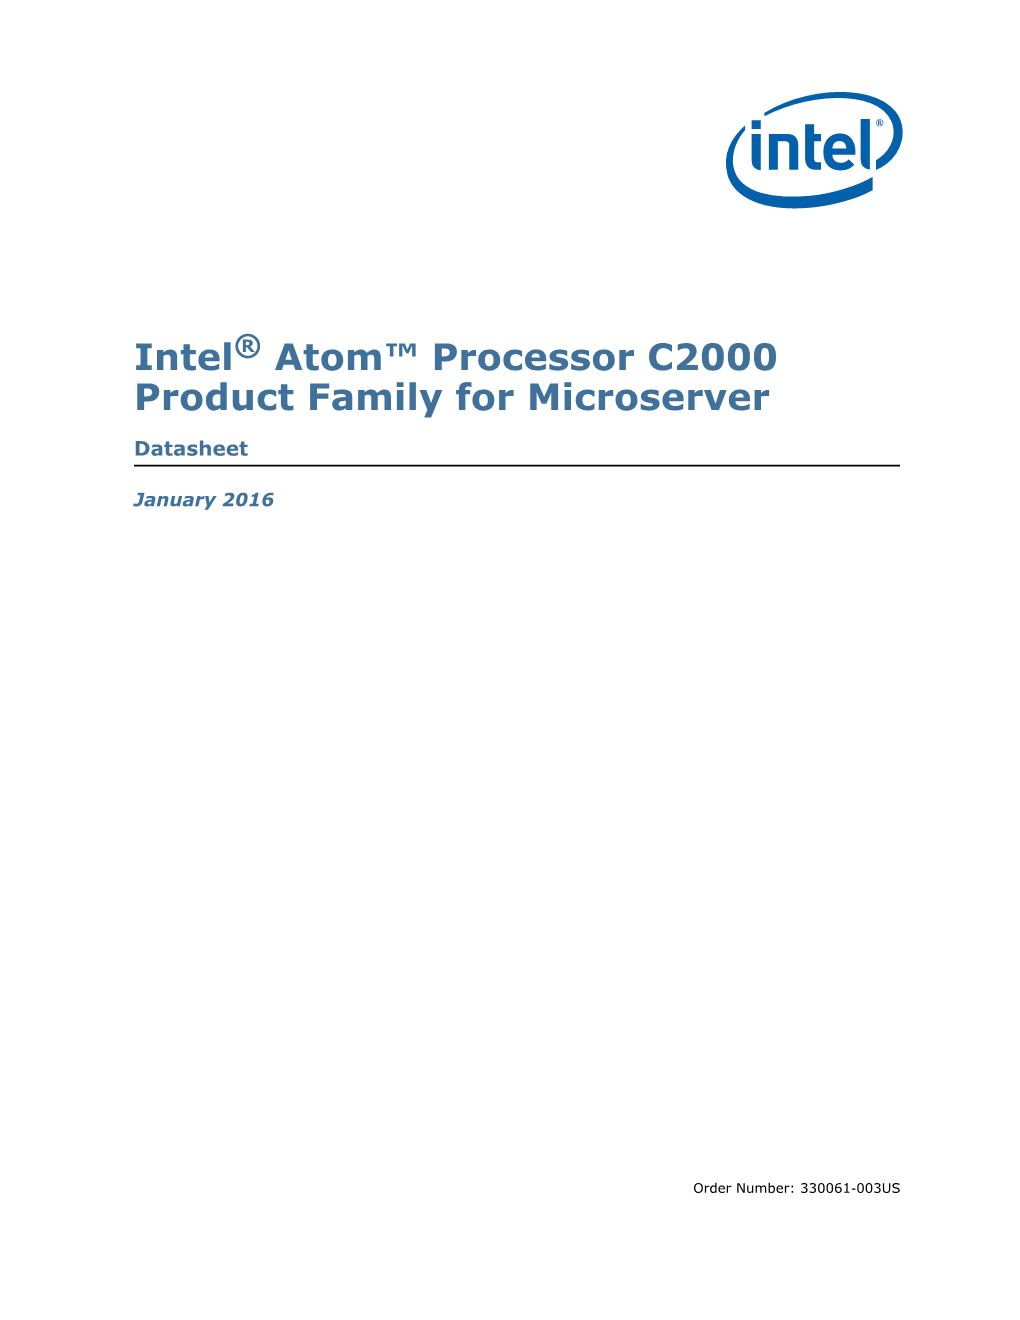 Intel Atom® Processor C2000 Product Family for Microserver